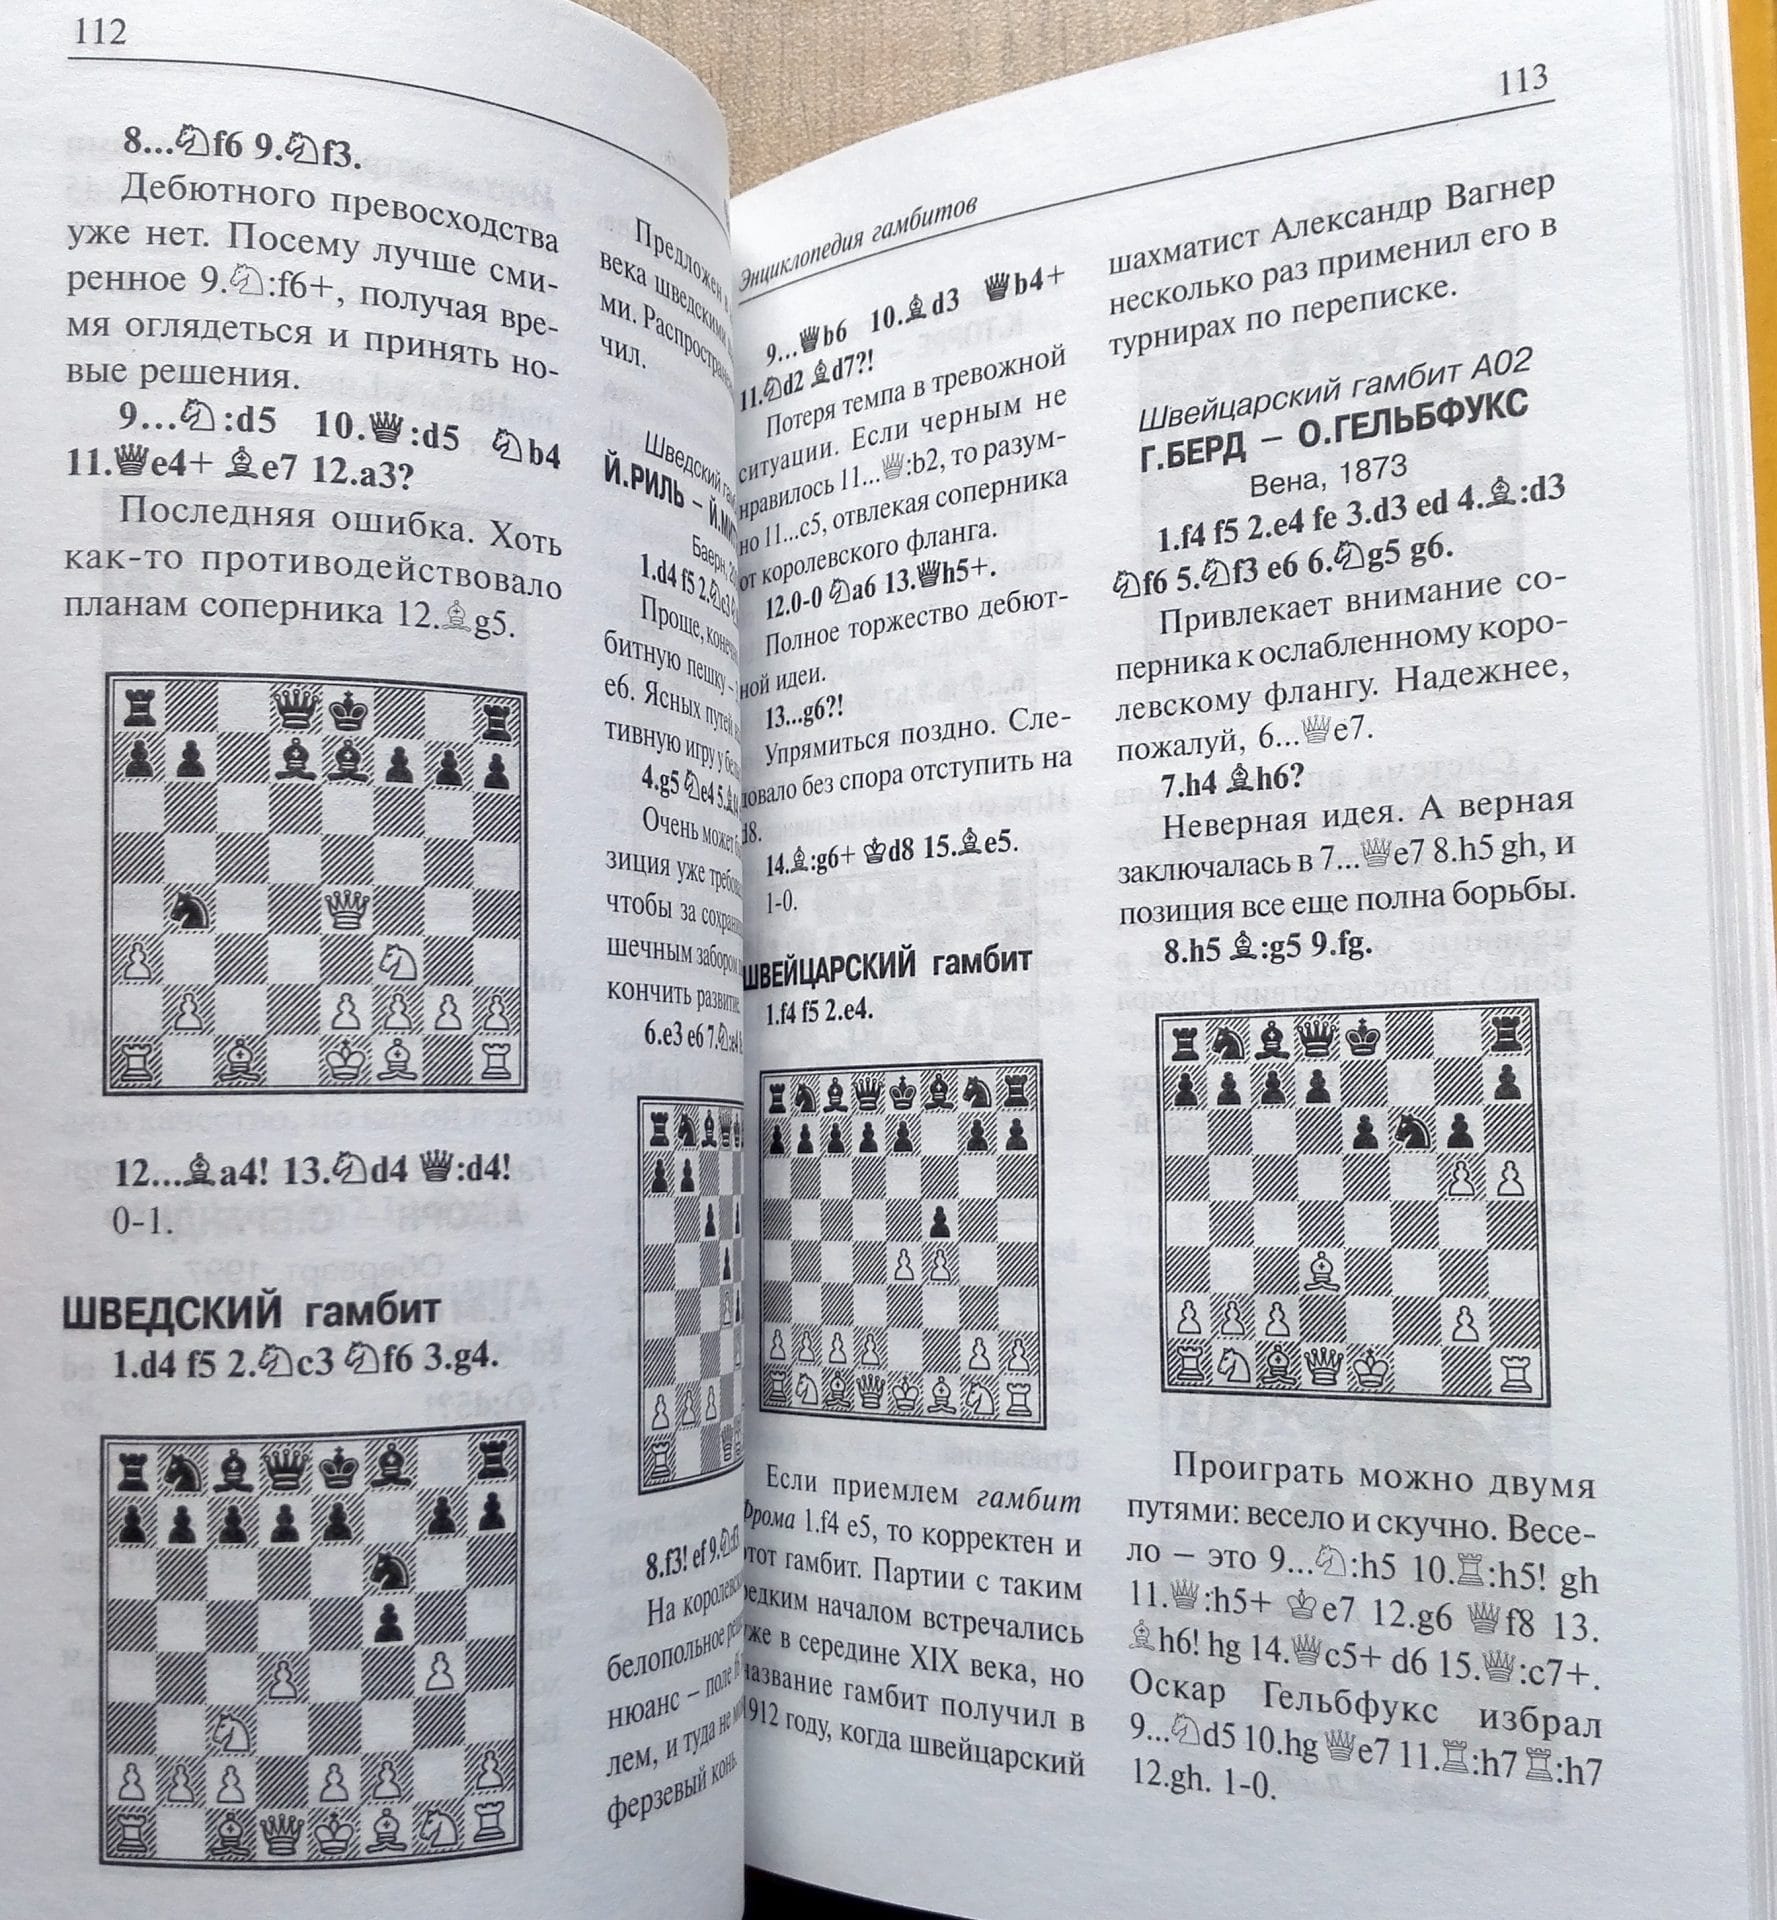 chess books ussr